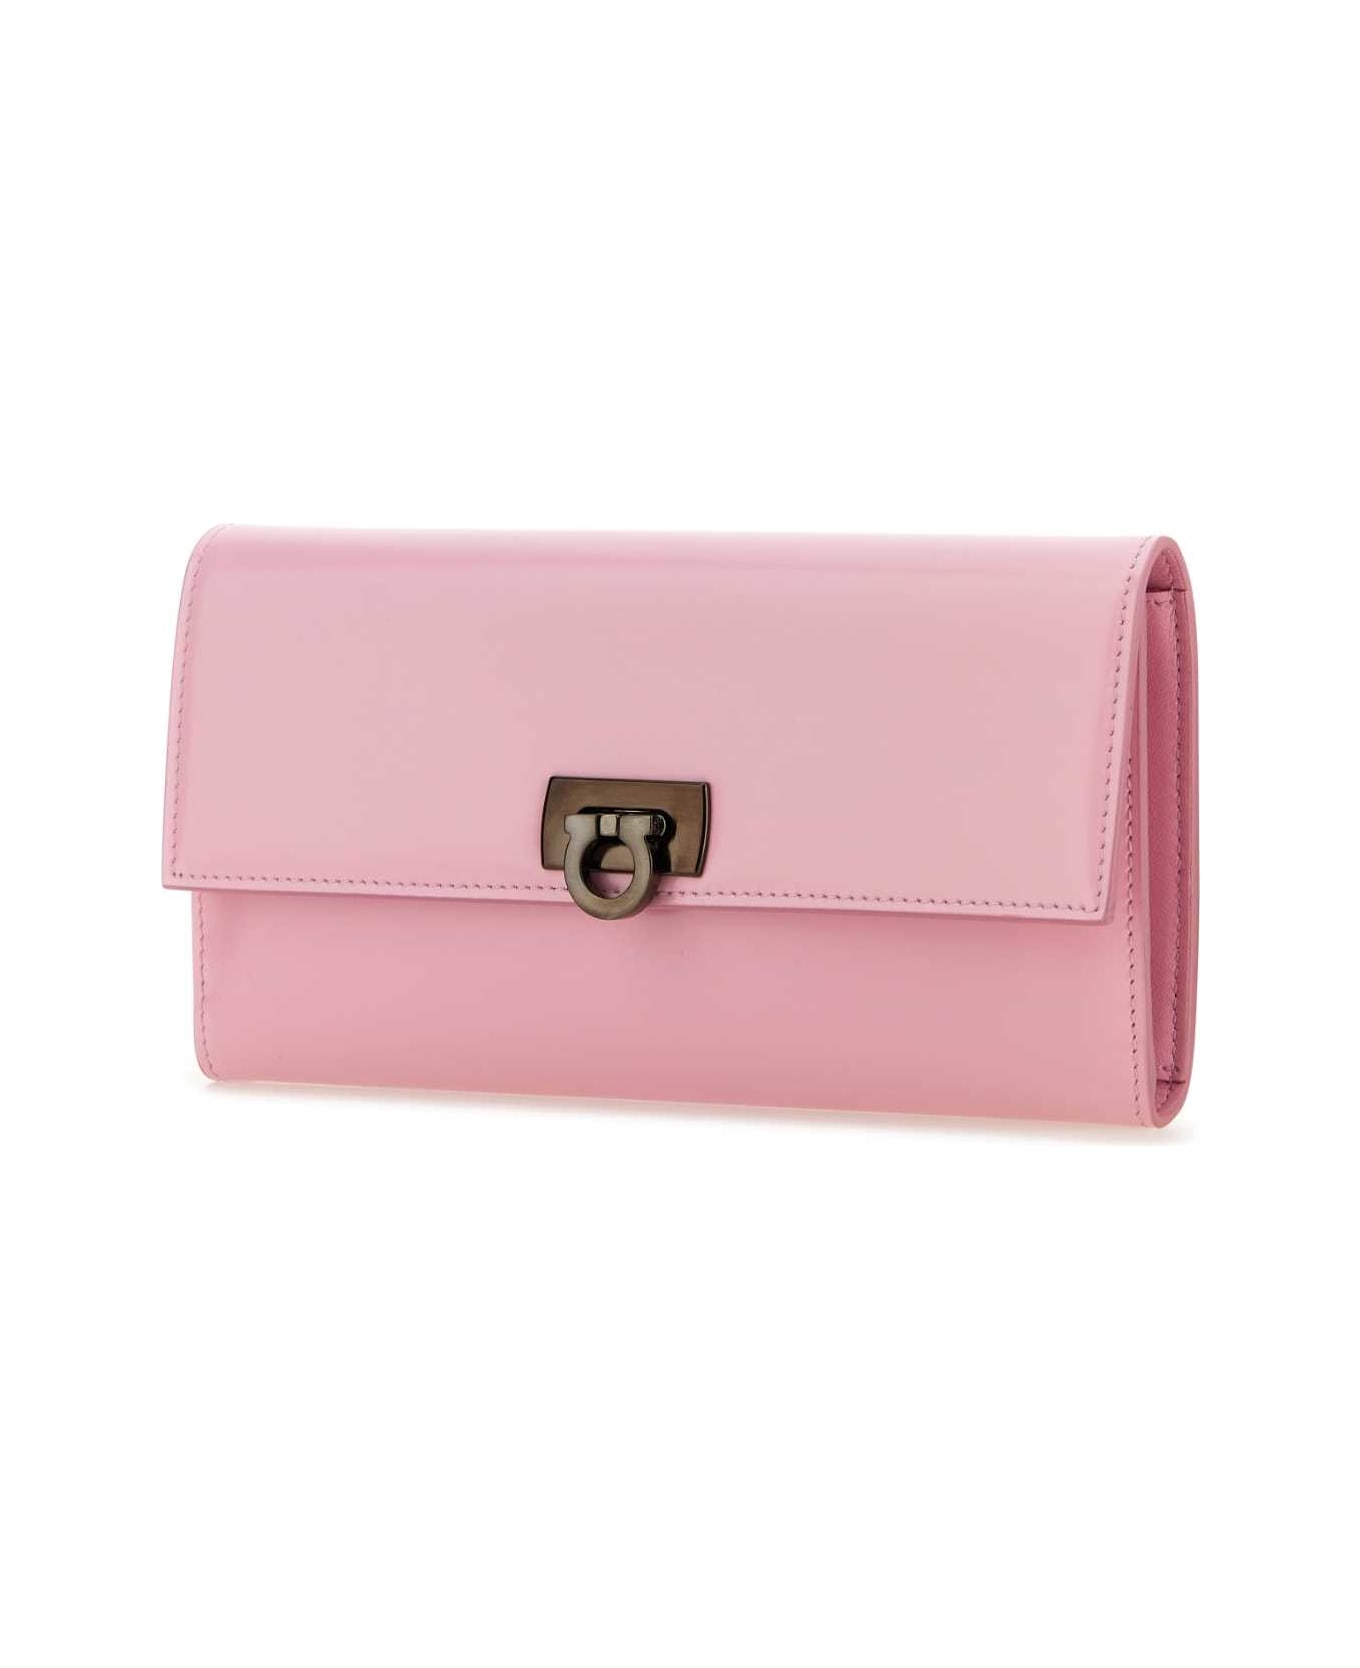 Ferragamo Pink Leather Wallet - BUBBLEGUM